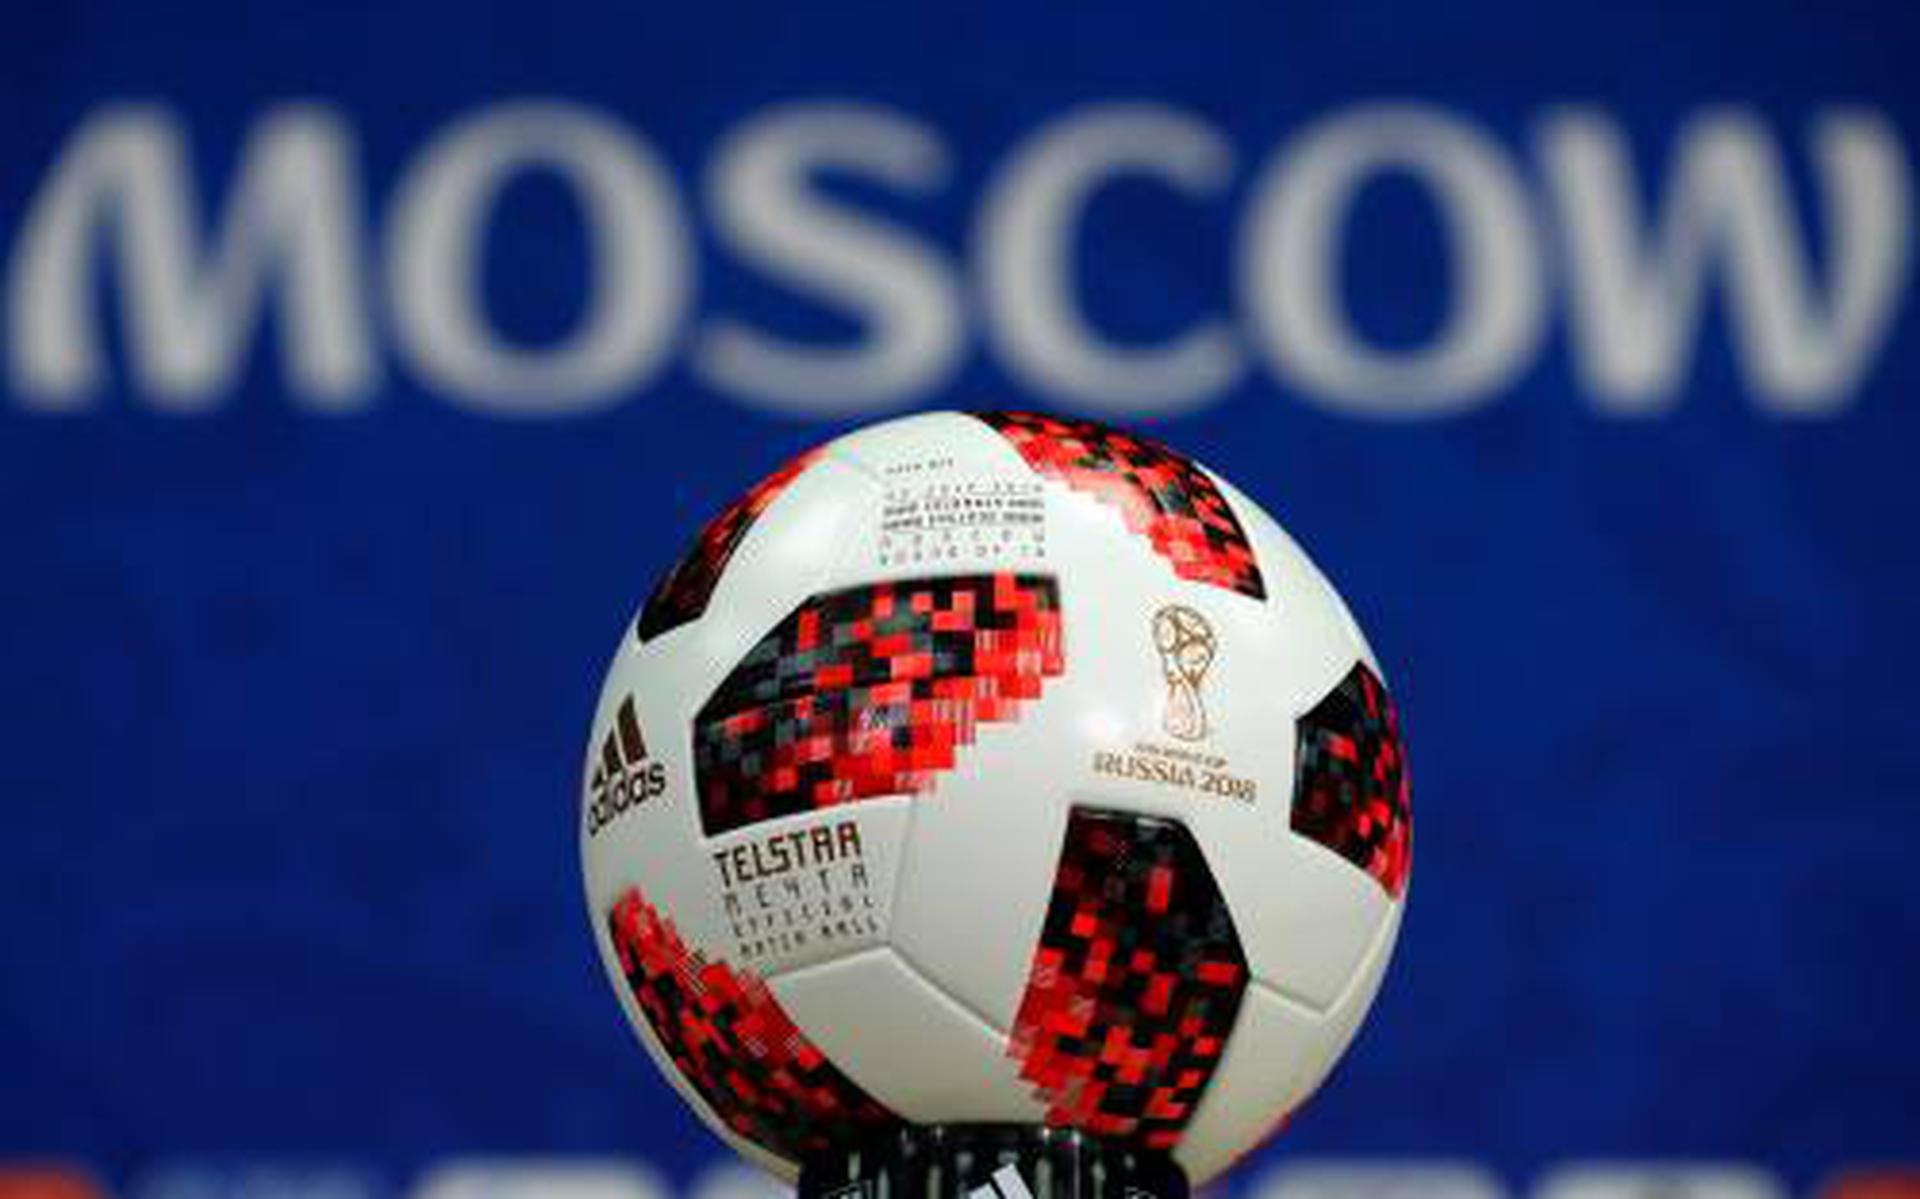 Aftrekken Rose kleur plug WK voetbal geeft Adidas sterk kwartaal - Leeuwarder Courant